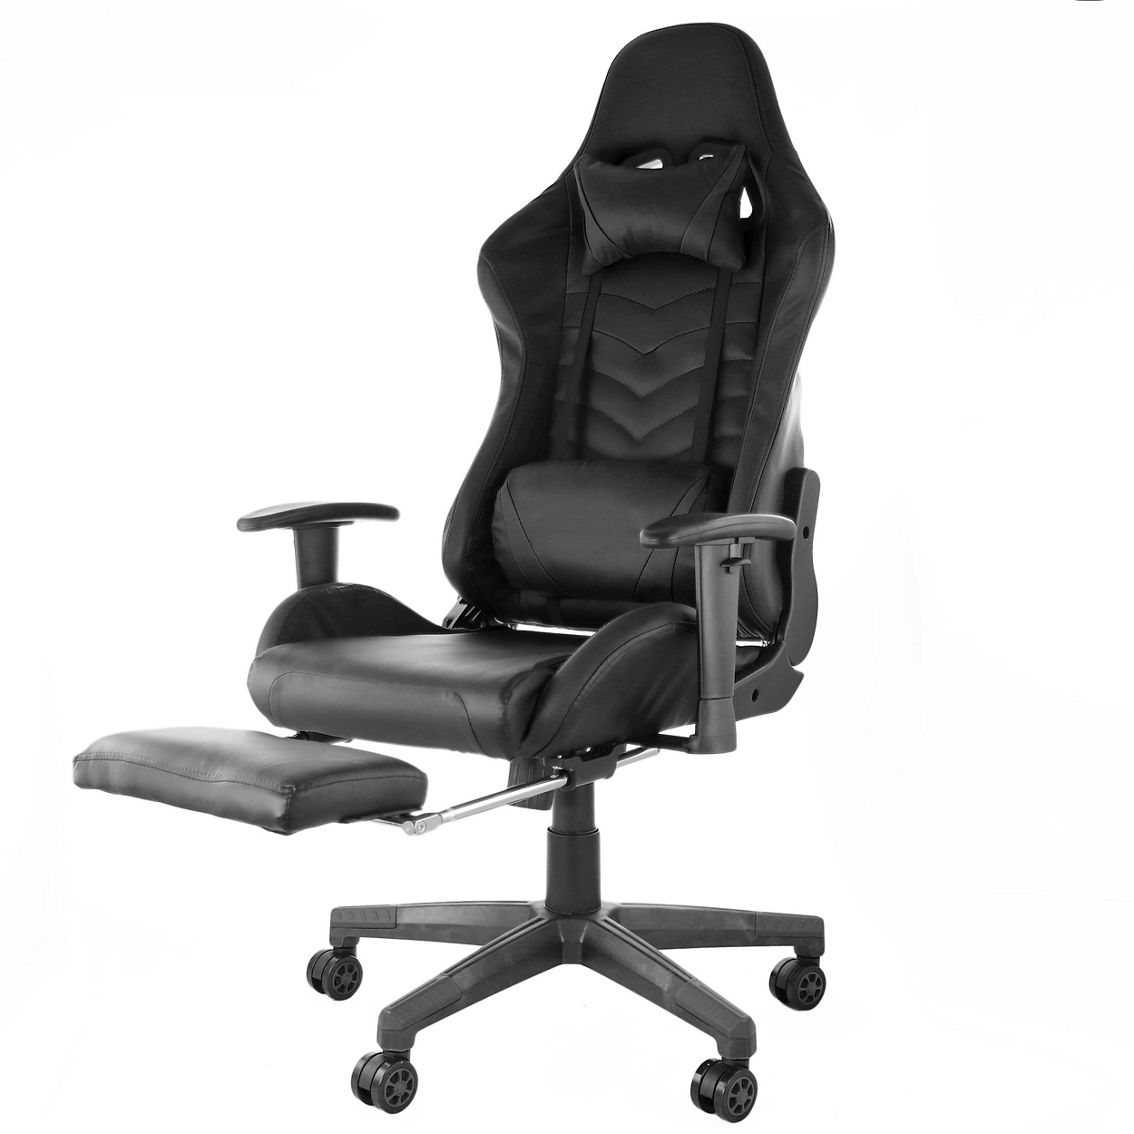 GameFitz Gaming Chair in Black - Image 3 of 5